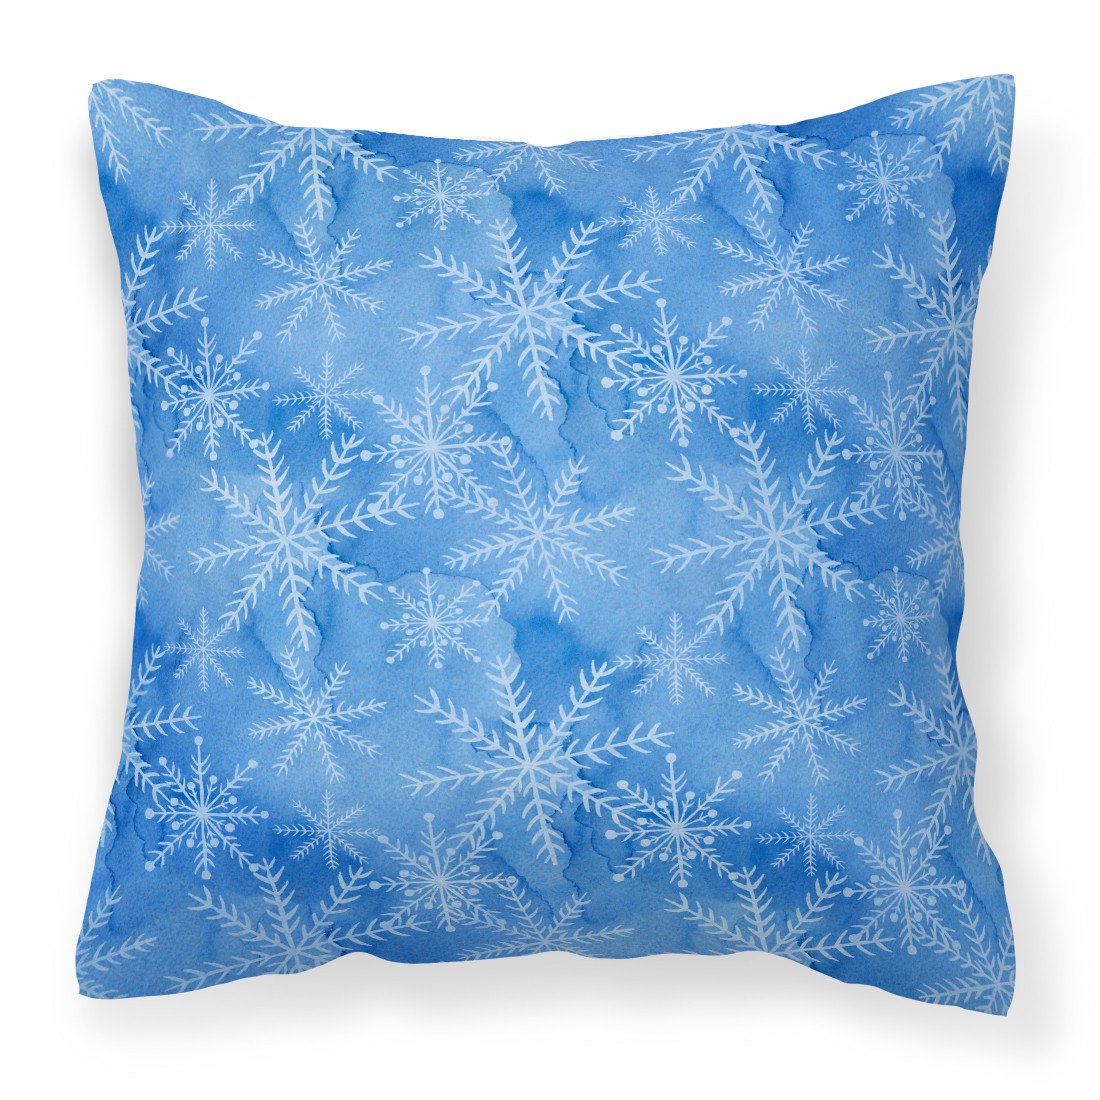 Watercolor Dark Blue Winter Snowflakes Fabric Decorative Pillow BB7576PW1818 by Caroline's Treasures